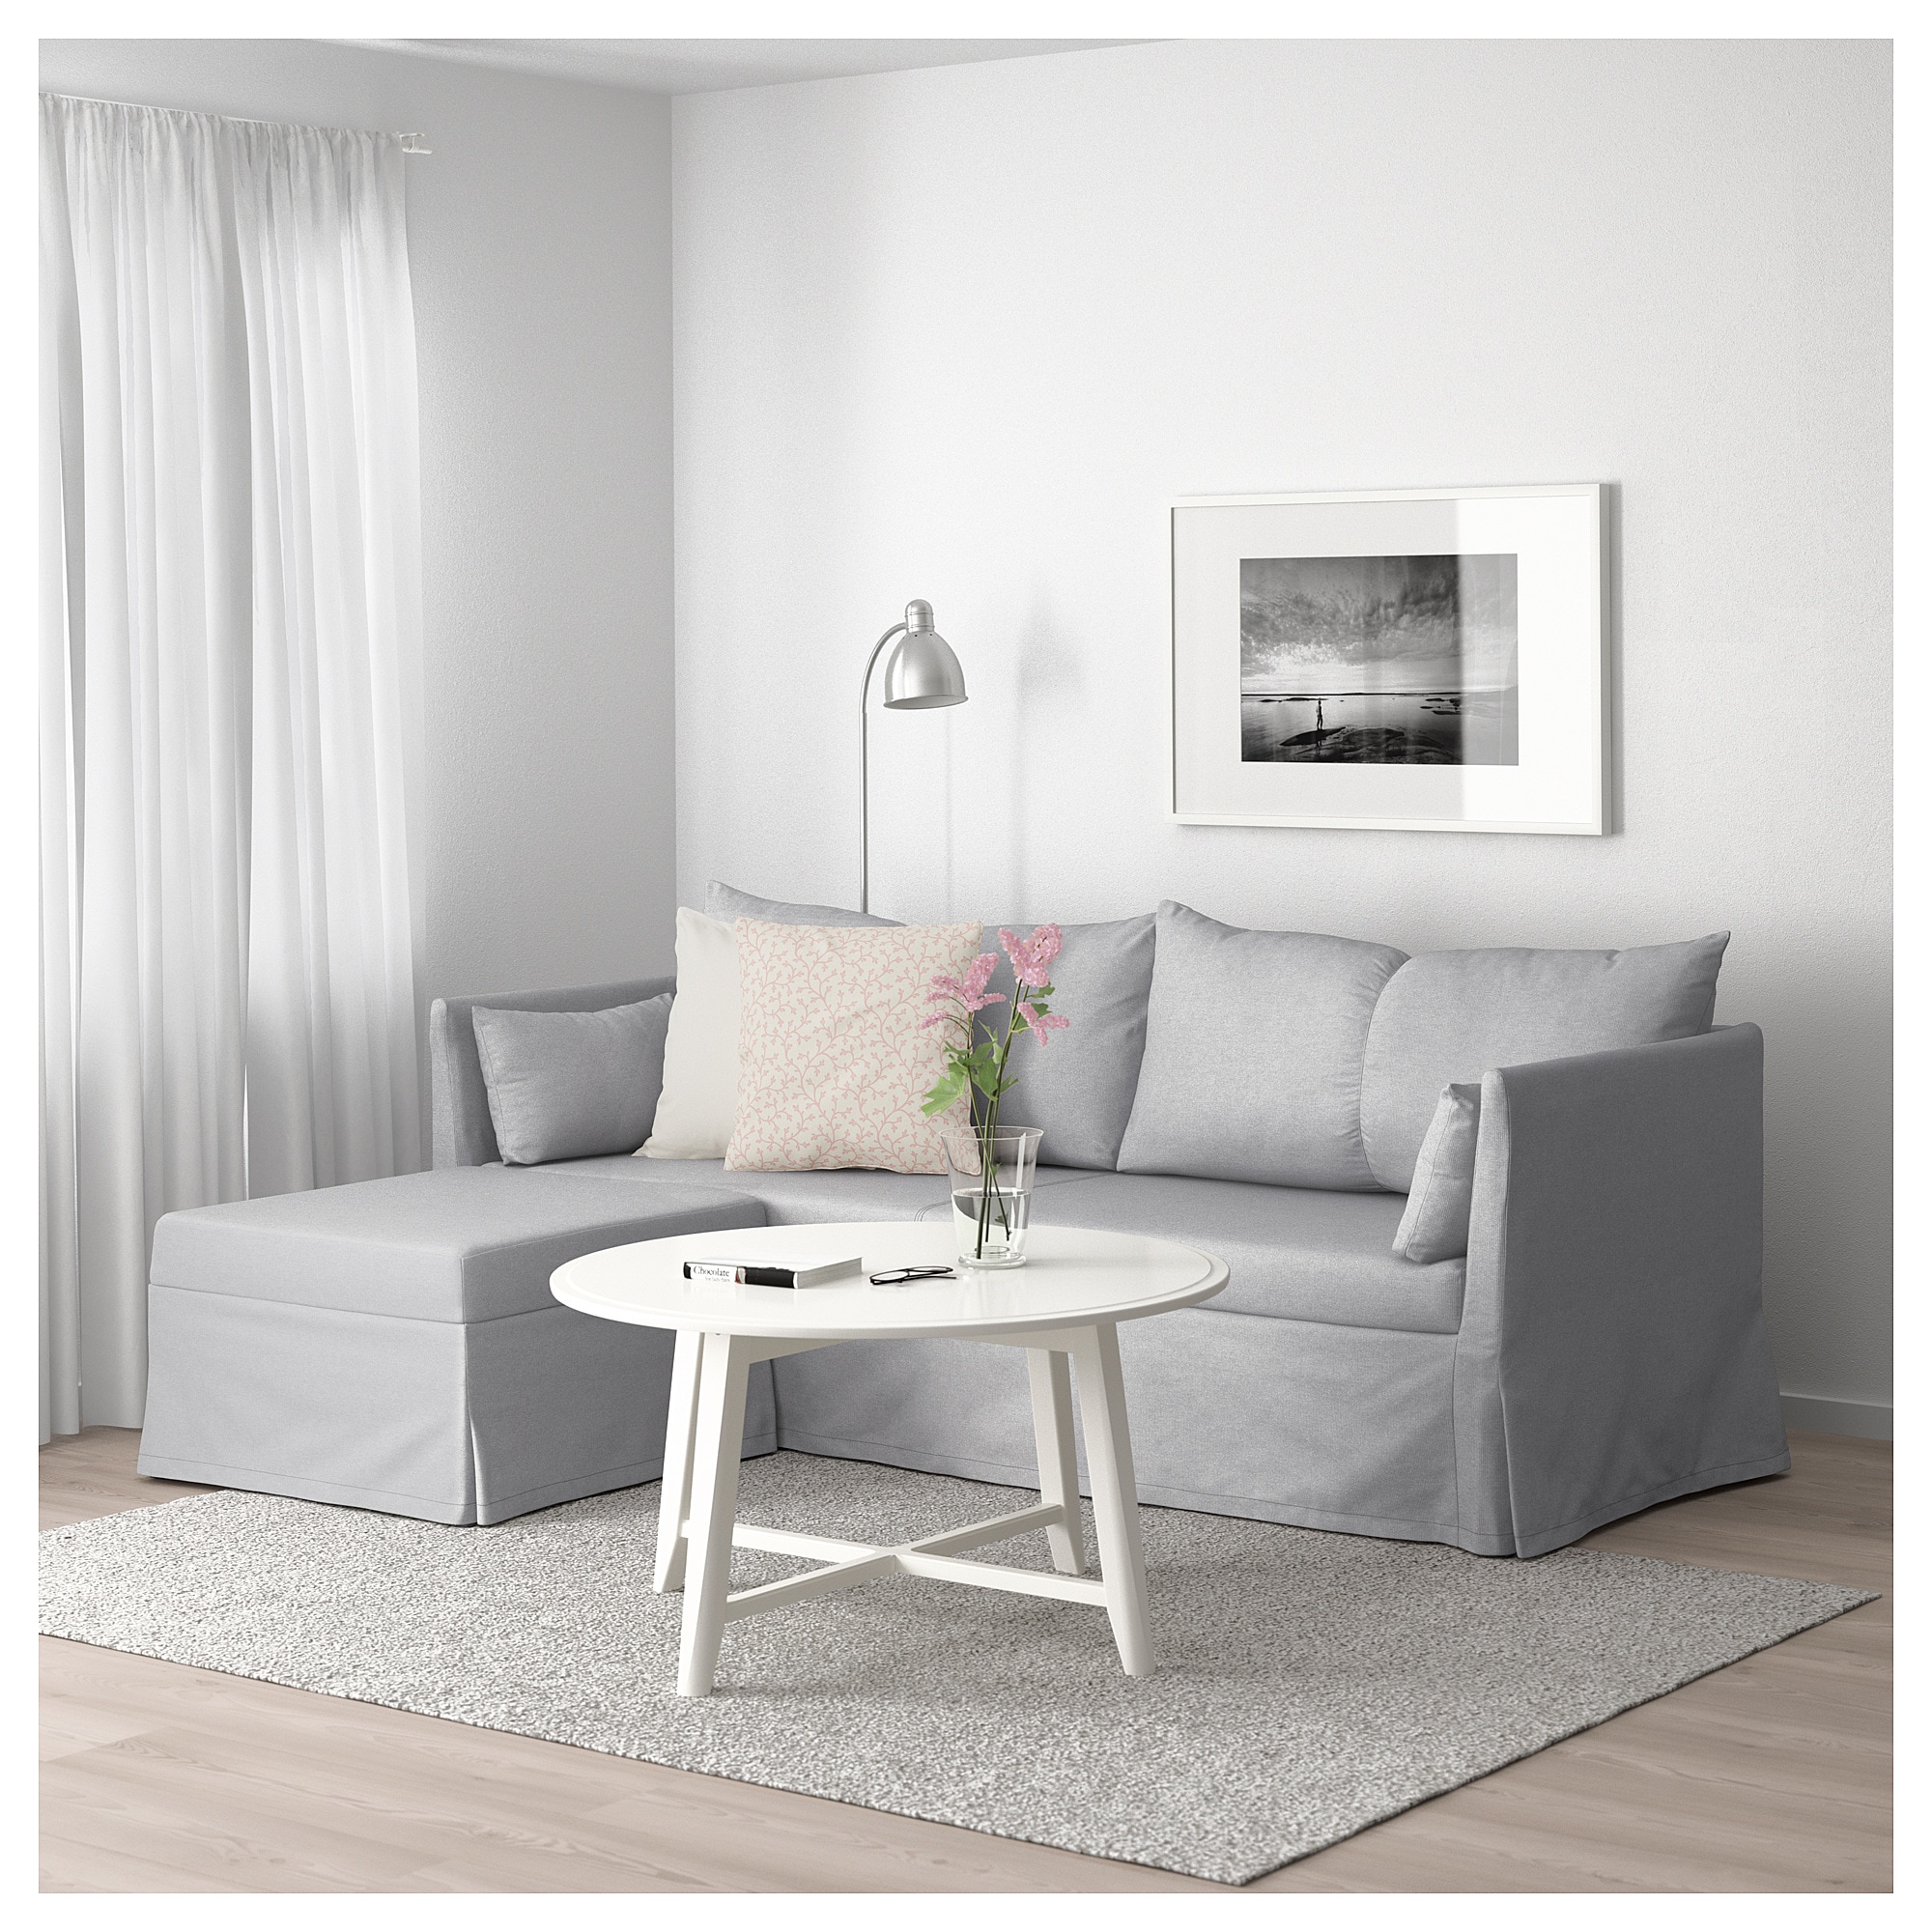 aktivering Erfaren person Slime IKEA Bråthult and Sandbacken sofa review: Same frame, different name? |  Comfort Works Blog & Sofa Resources